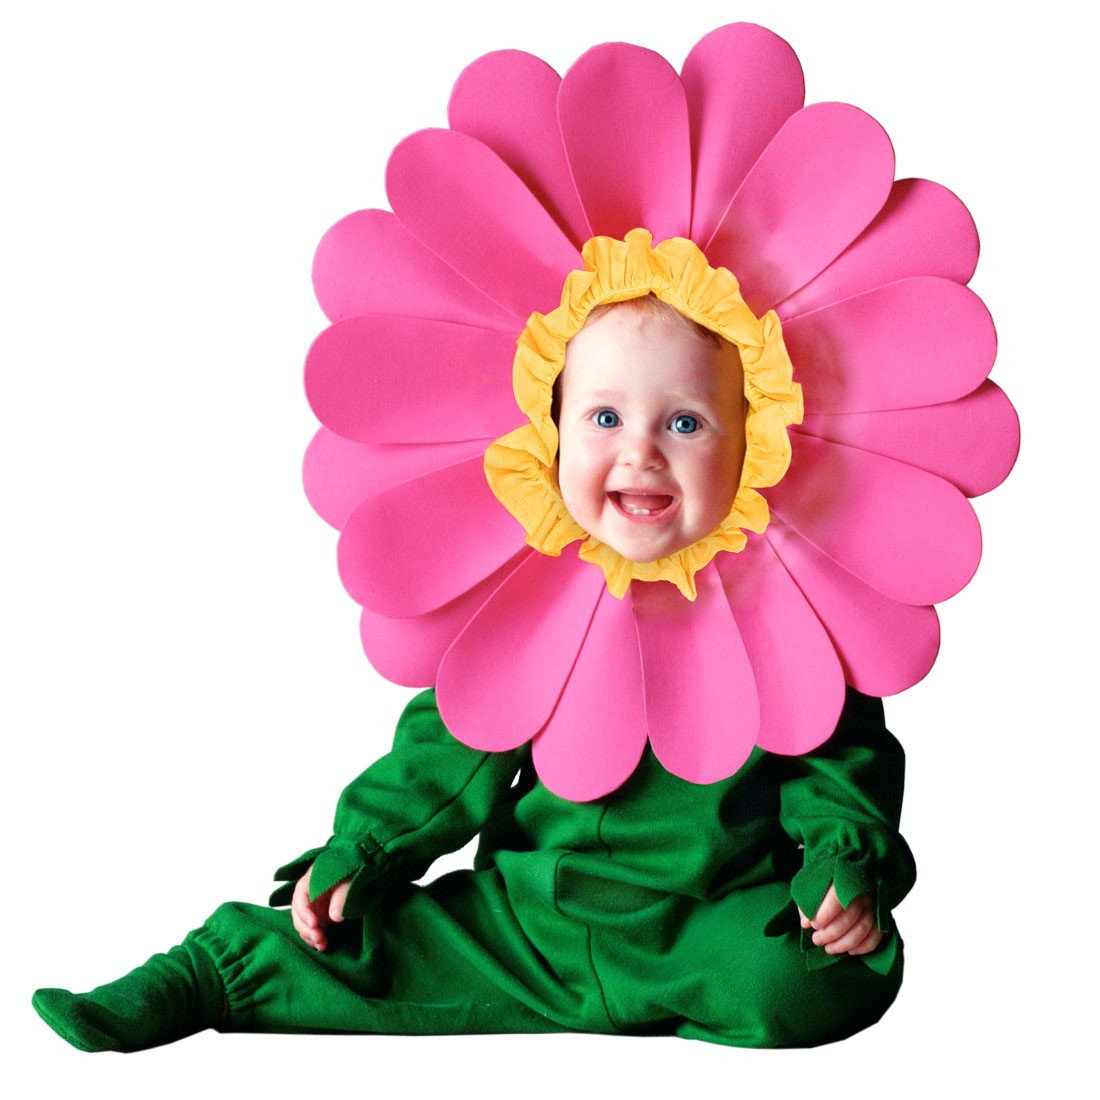 Flower Halloween Costume For Toddler
 Tom Arma Flower Kids Costumes